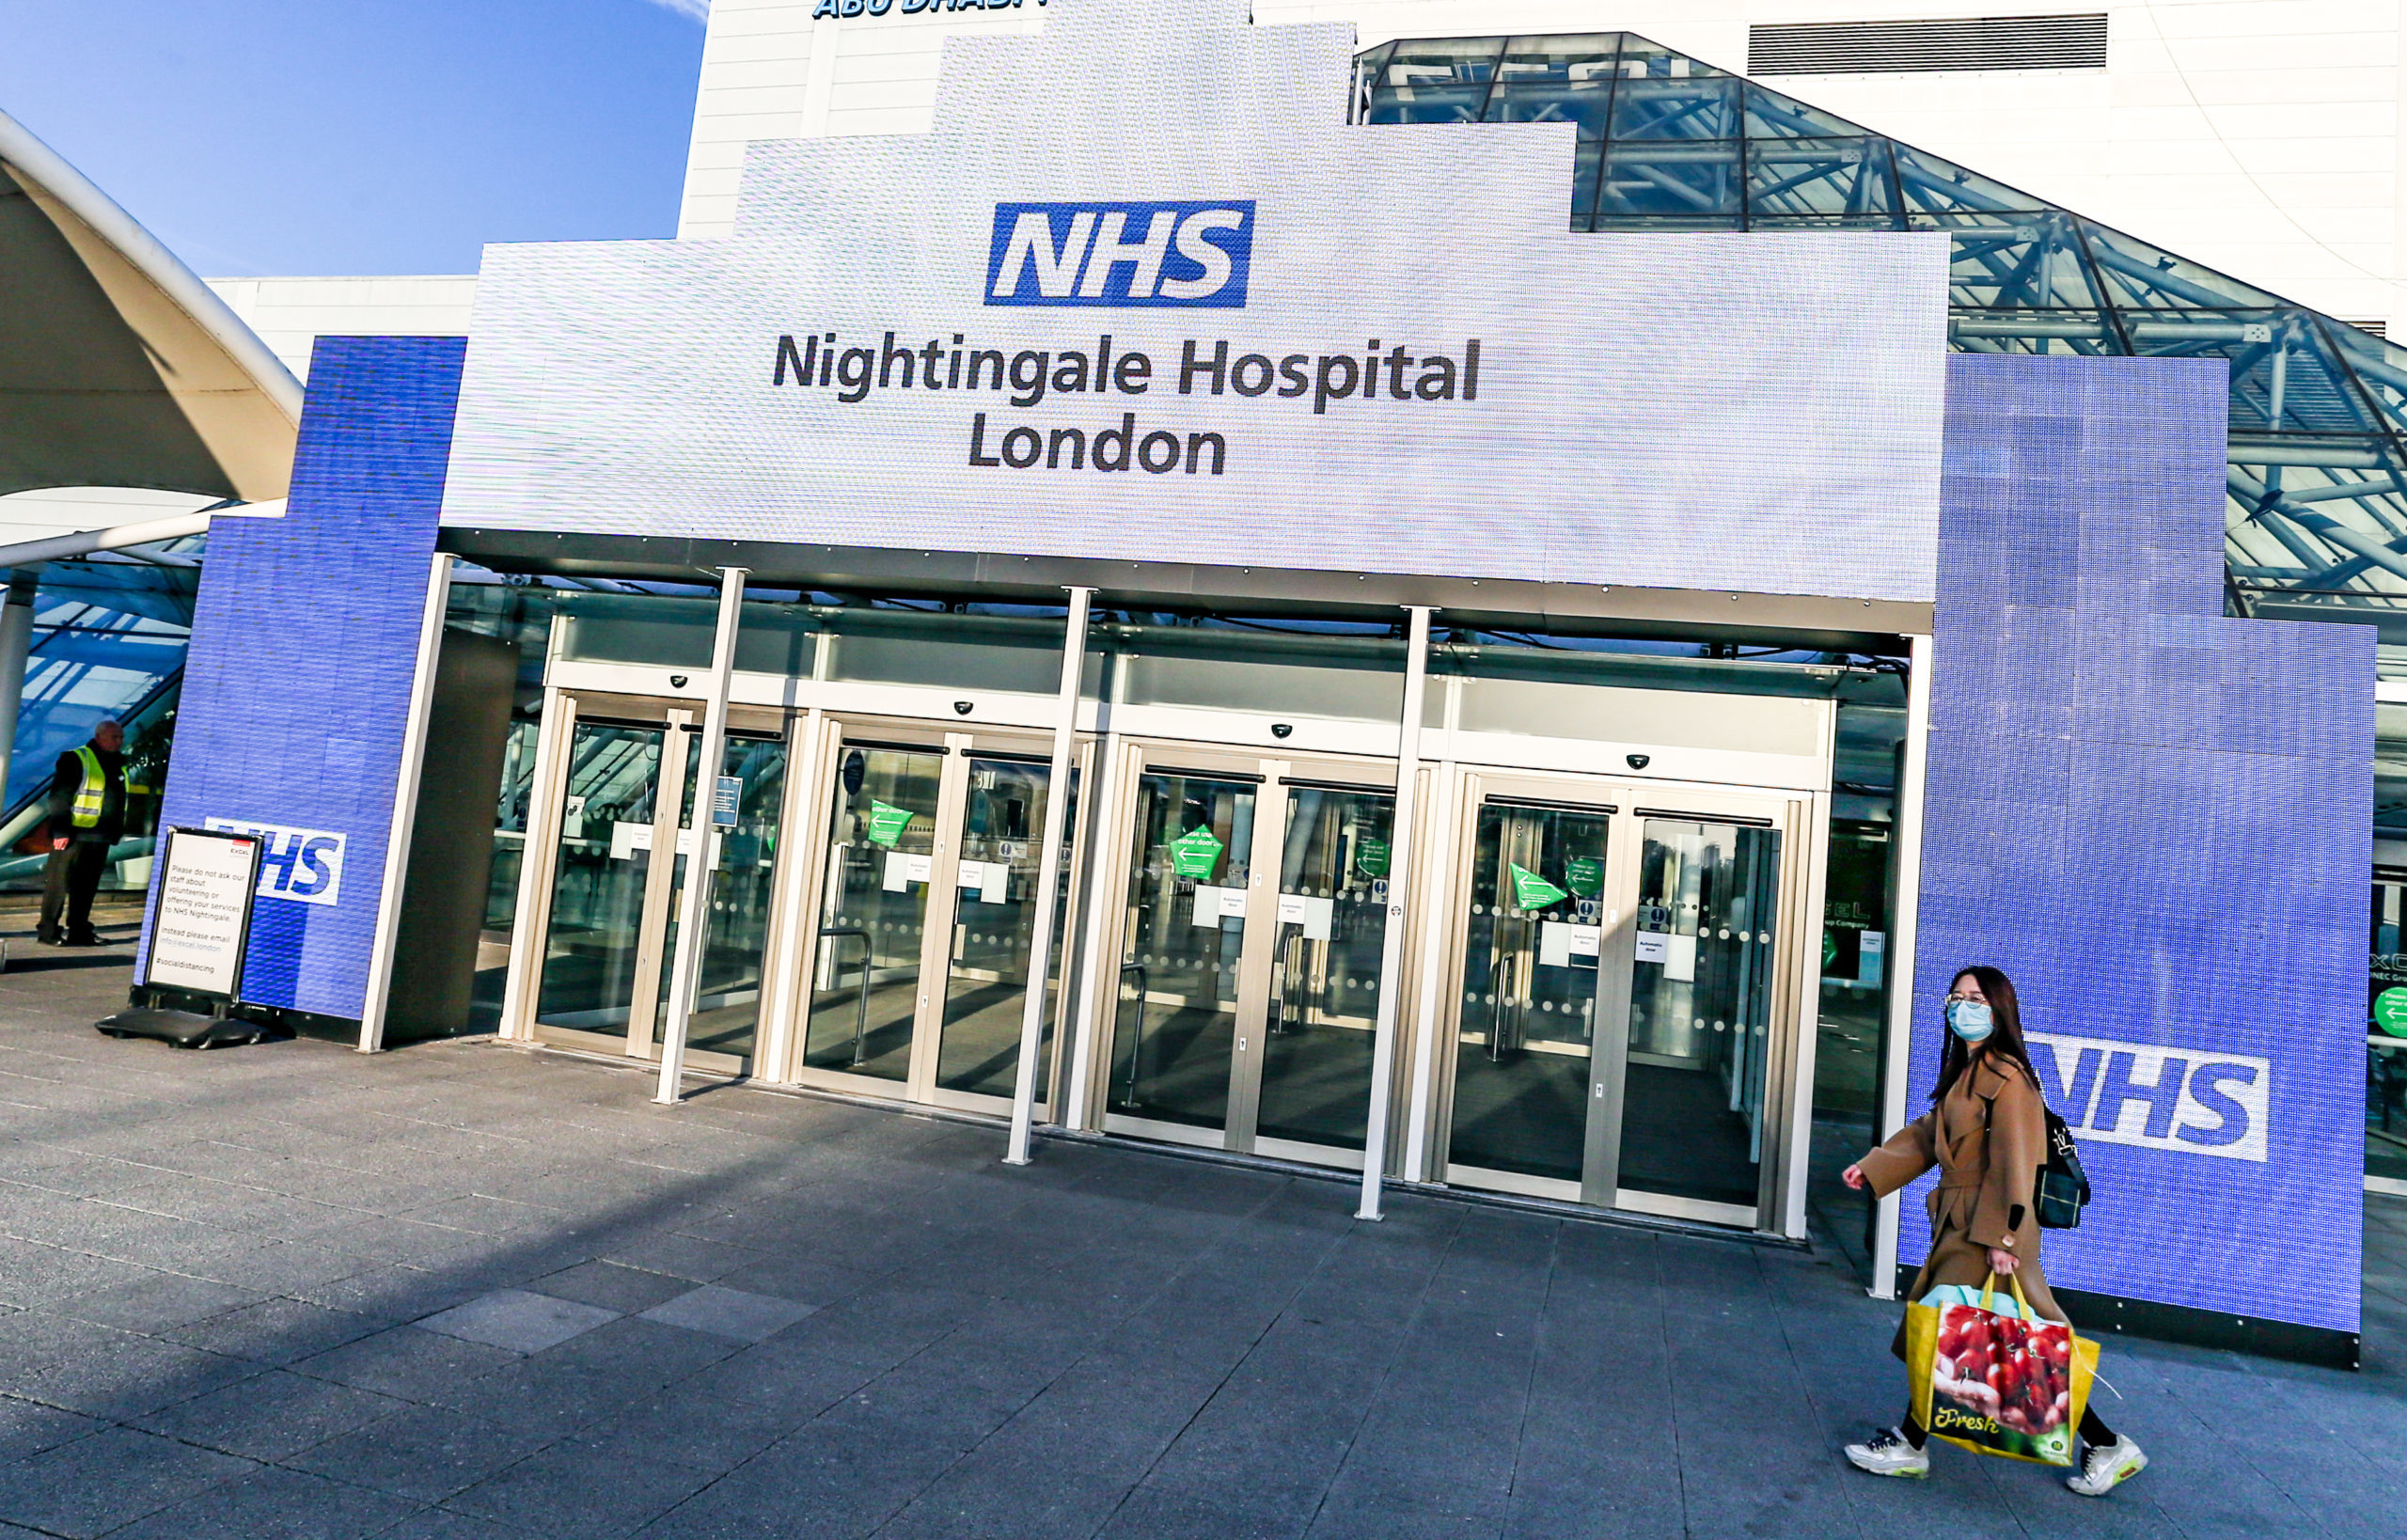 Entrance to NHS Nightingale hospital London